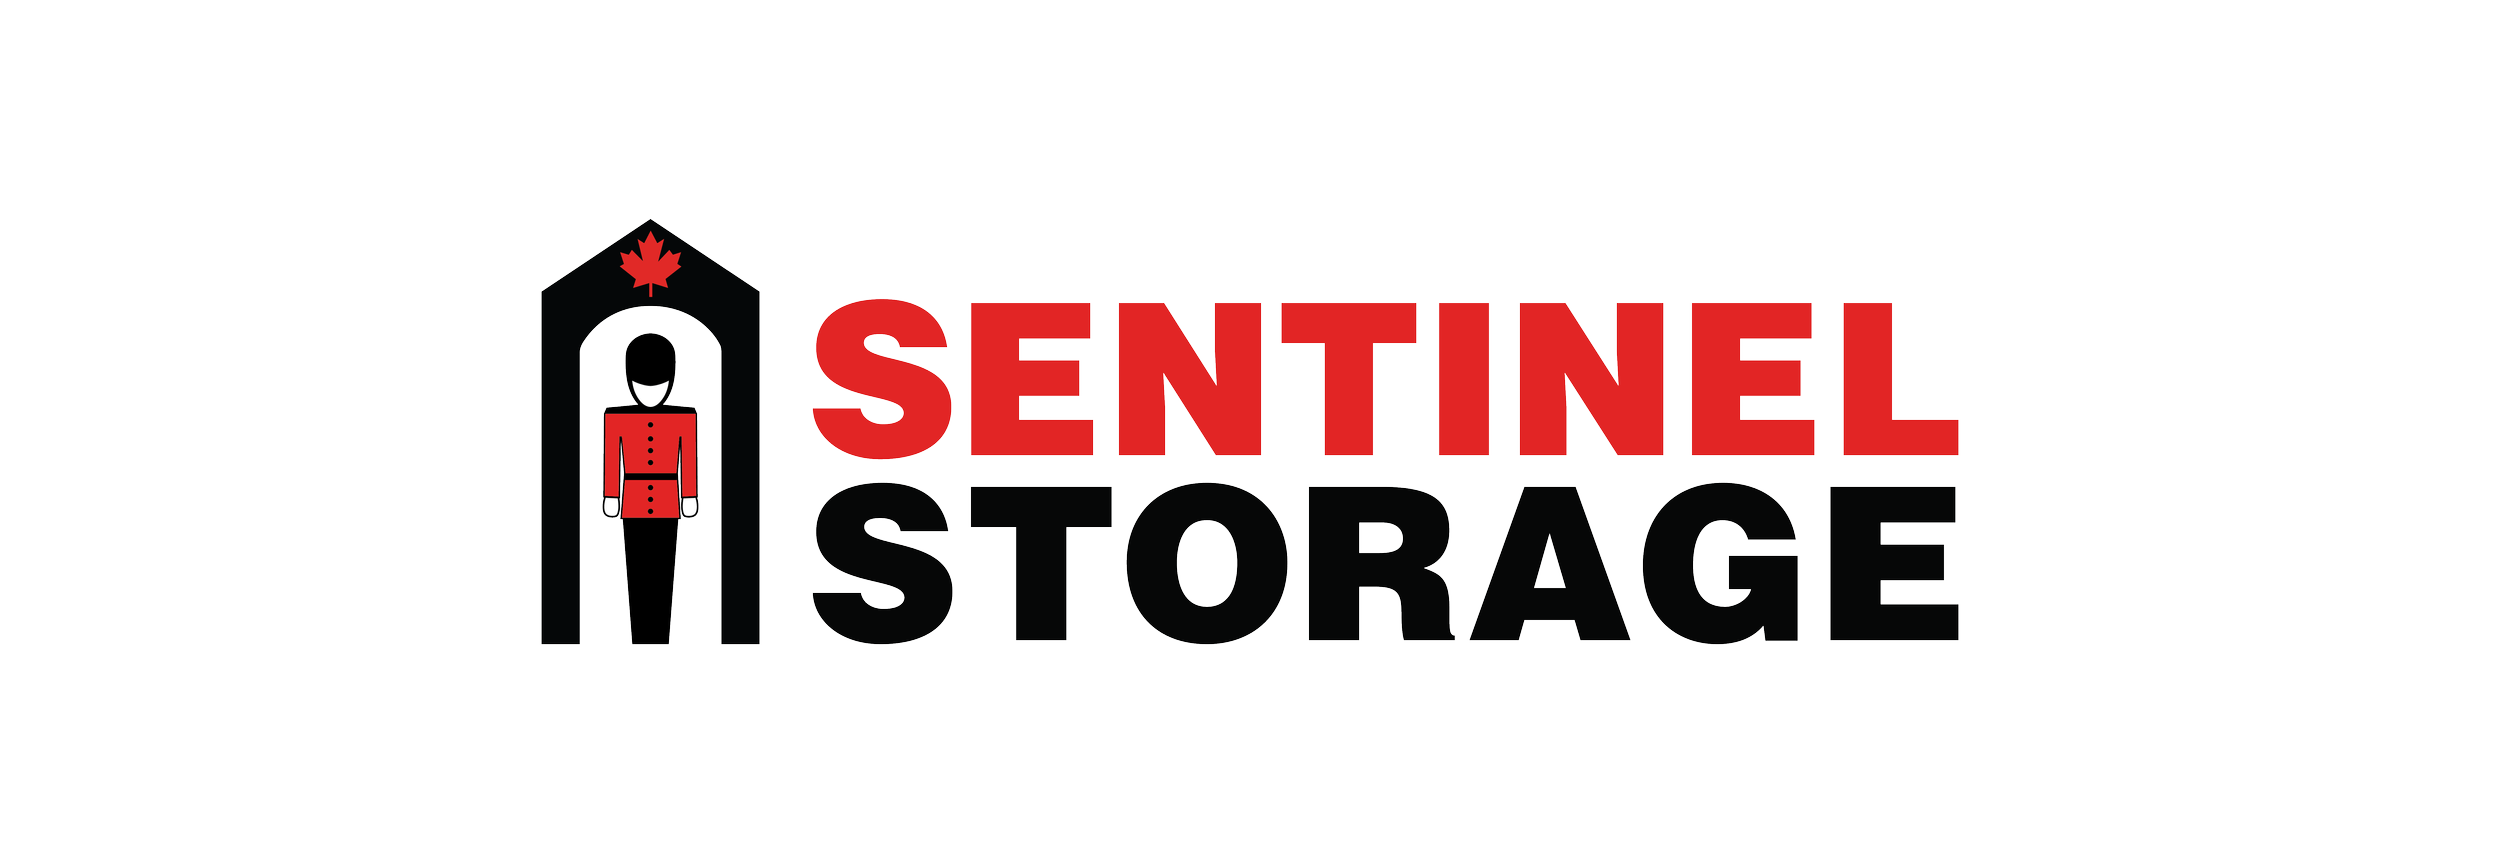 Sentinel Logo.png